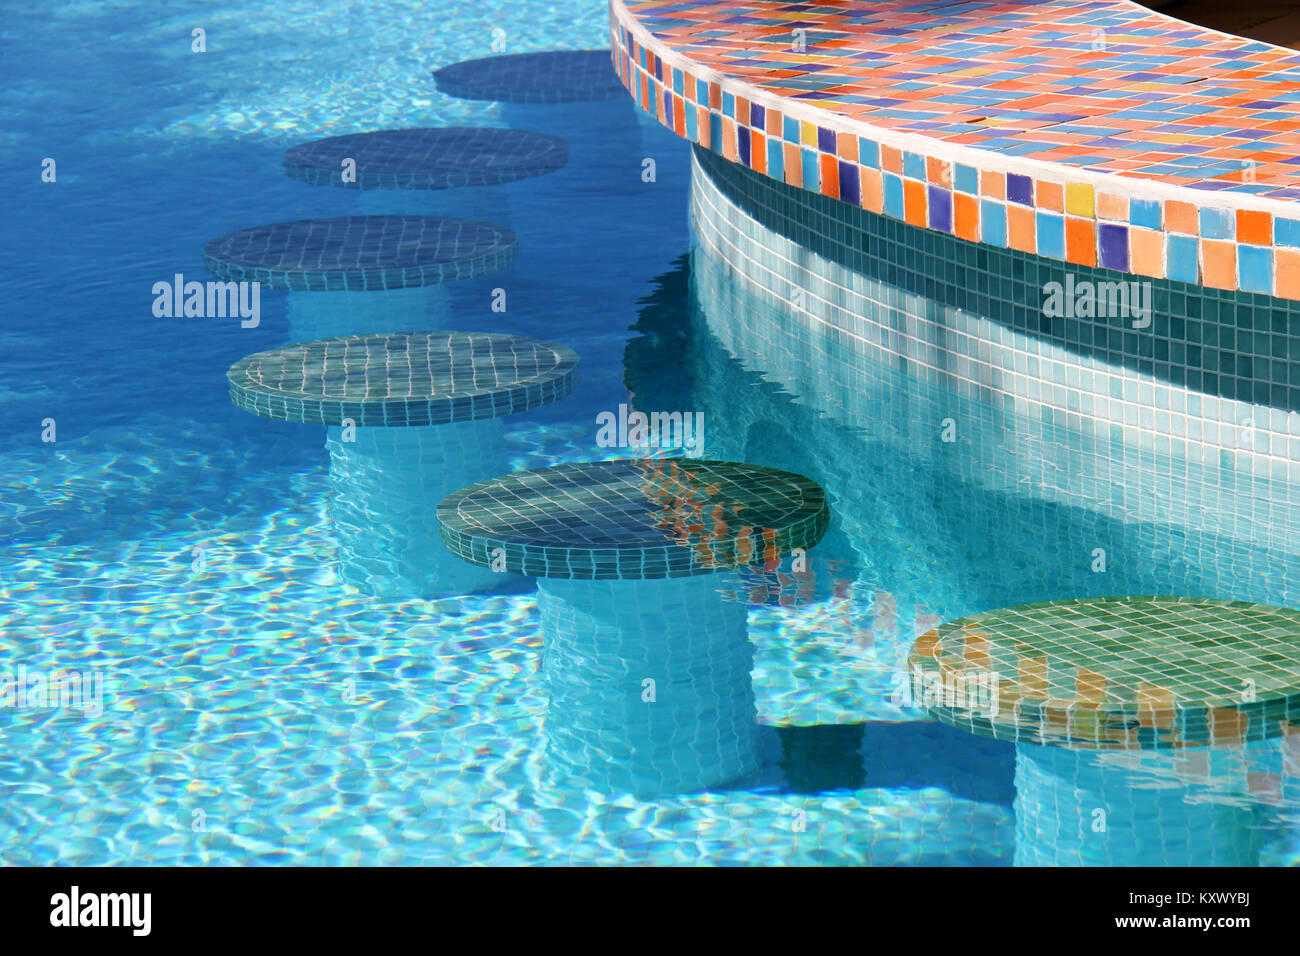 Buntes Mosaik Barhocker in einem Pool Stockfotografie - Alamy